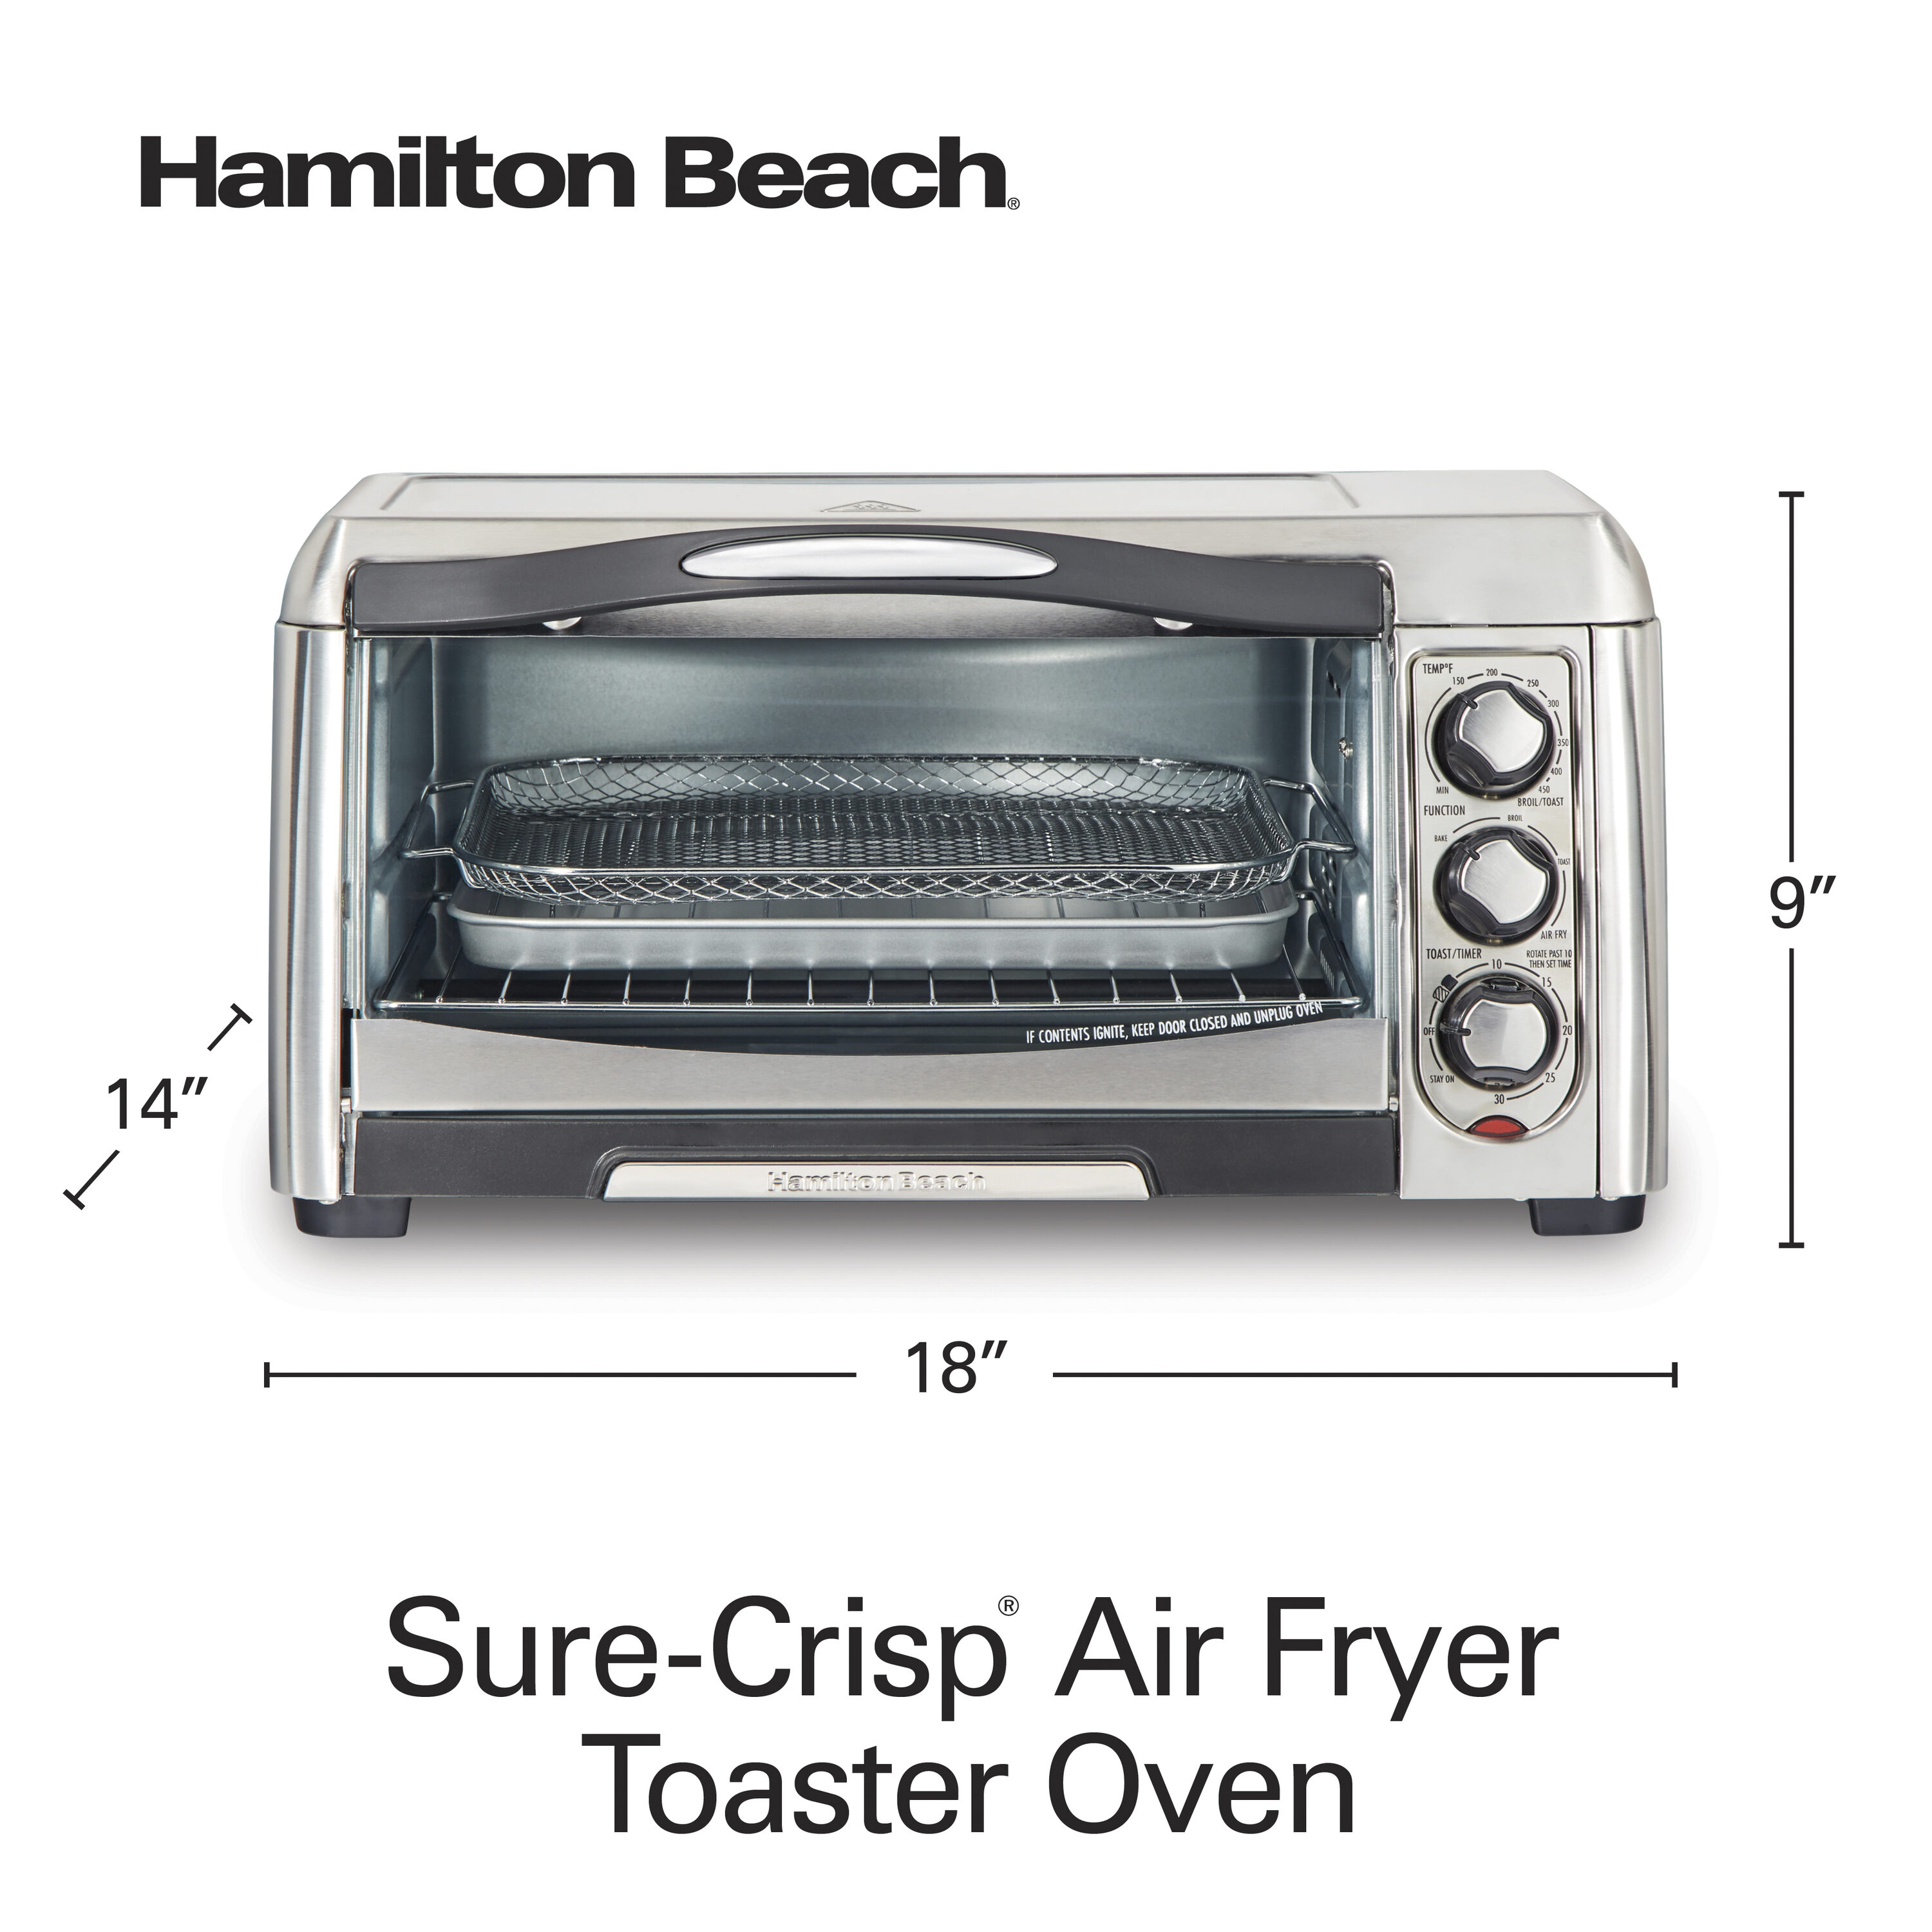 Air Fryer vs. Toaster Oven Air Fryer